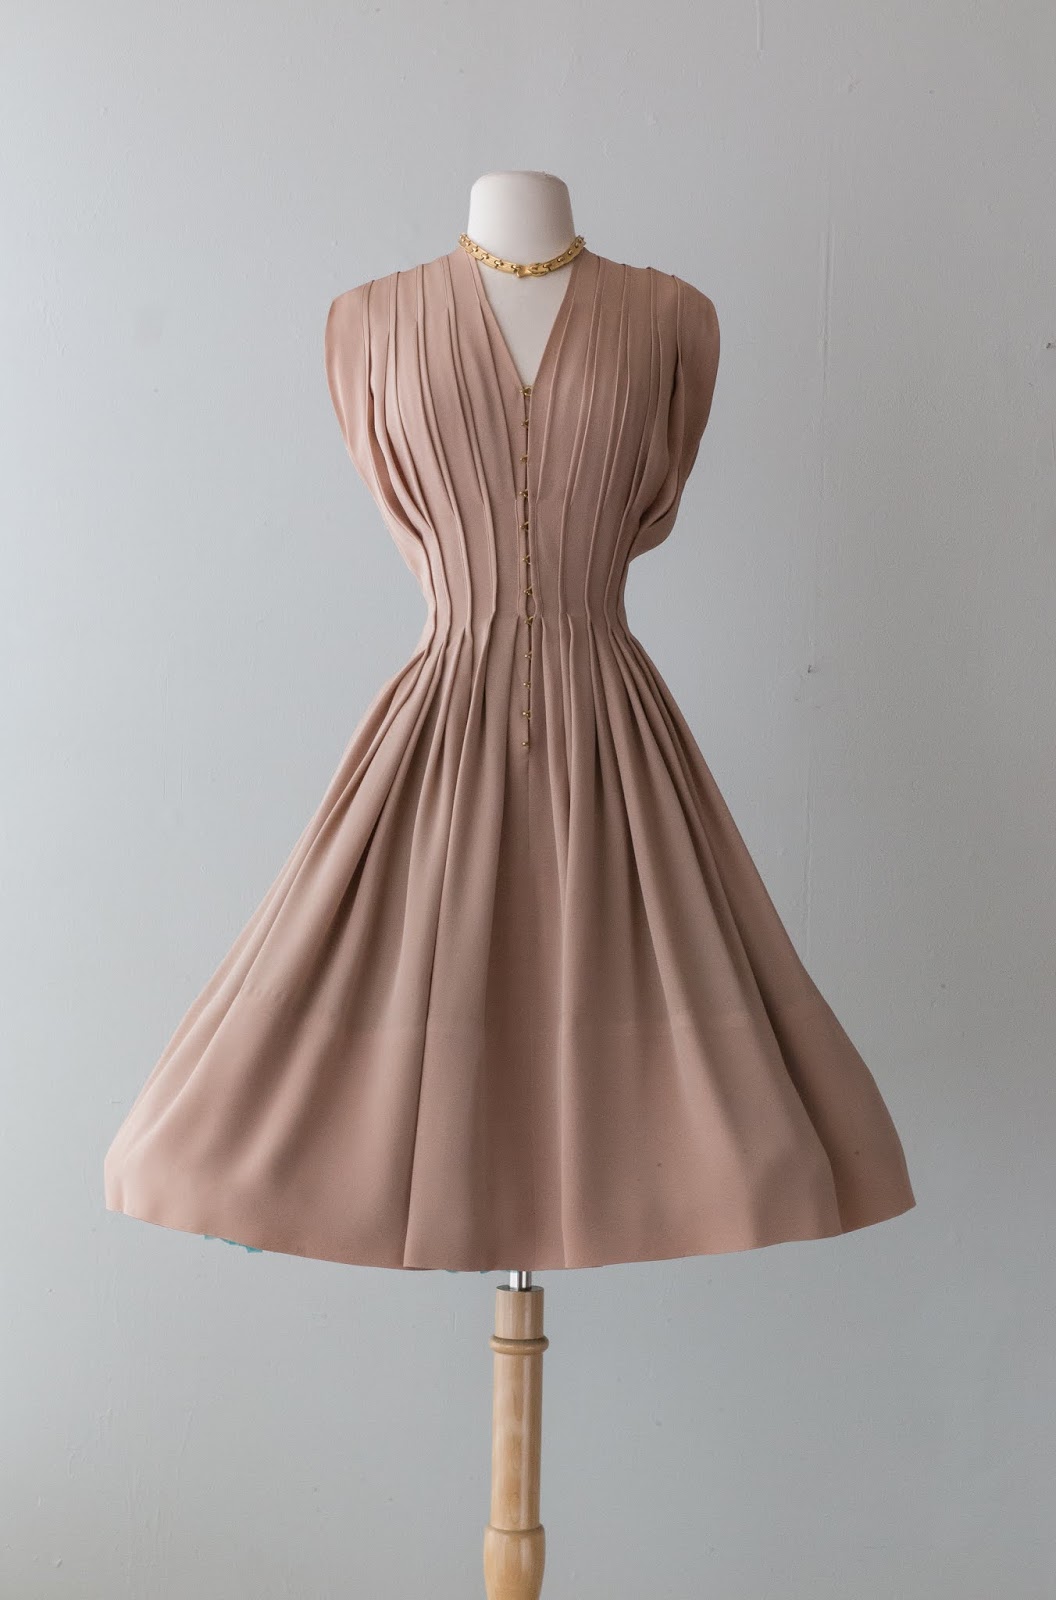 Xtabay Vintage Clothing Boutique - Portland, Oregon: Dress Archive, May ...